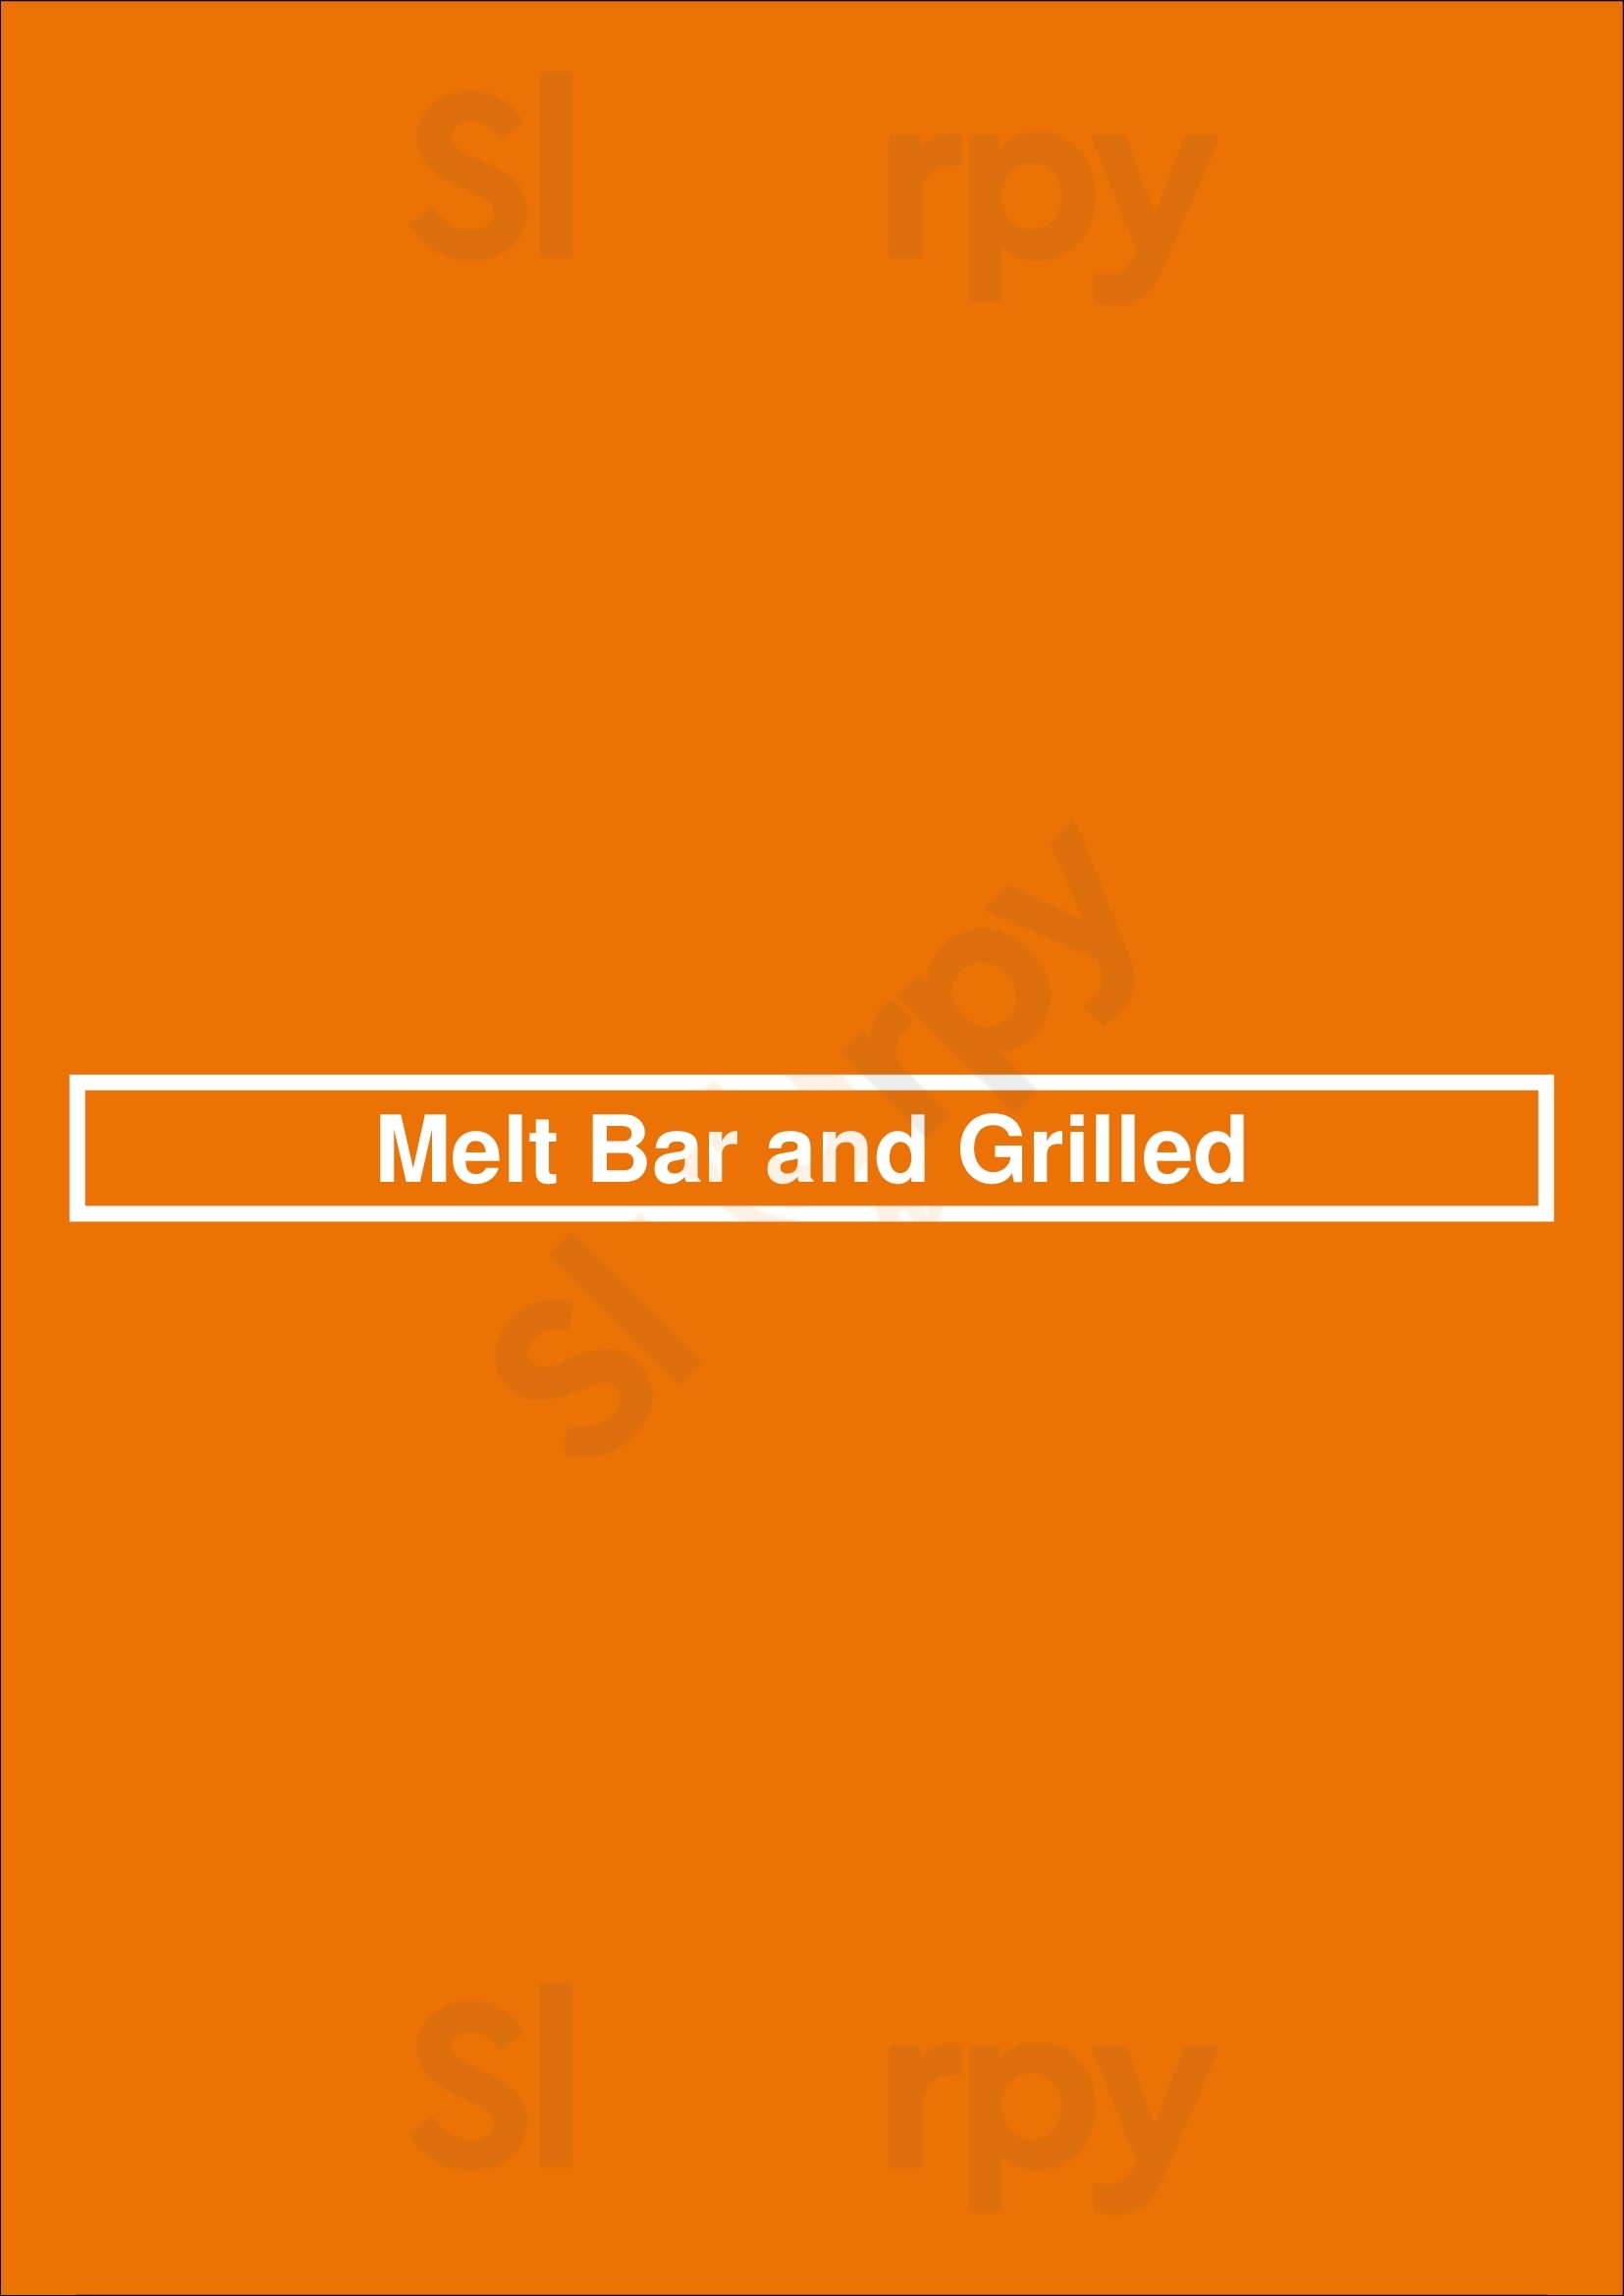 Melt Bar And Grilled Avon Menu - 1